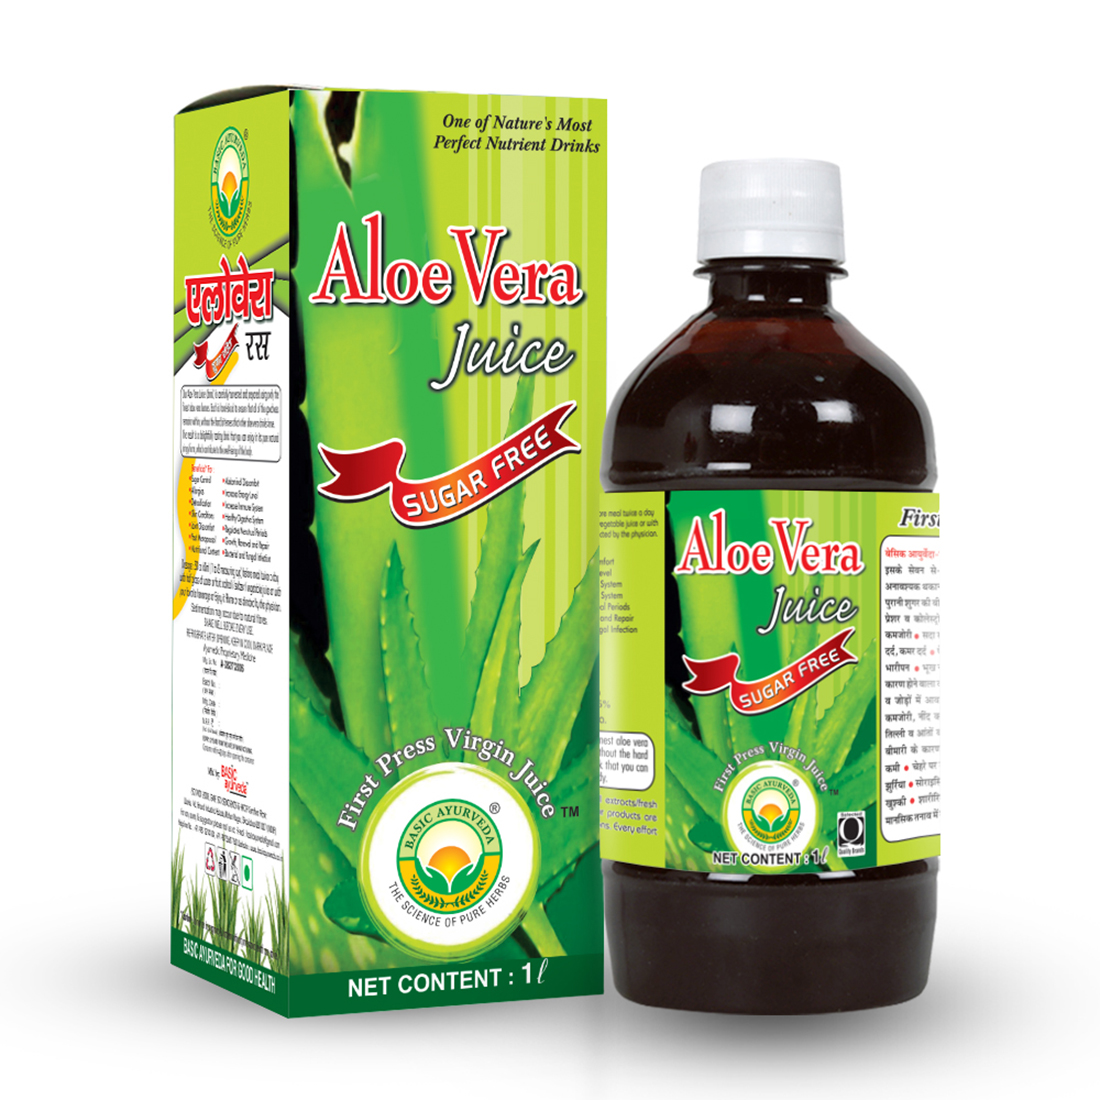 Aloe Vera Juice (Sugar Free)